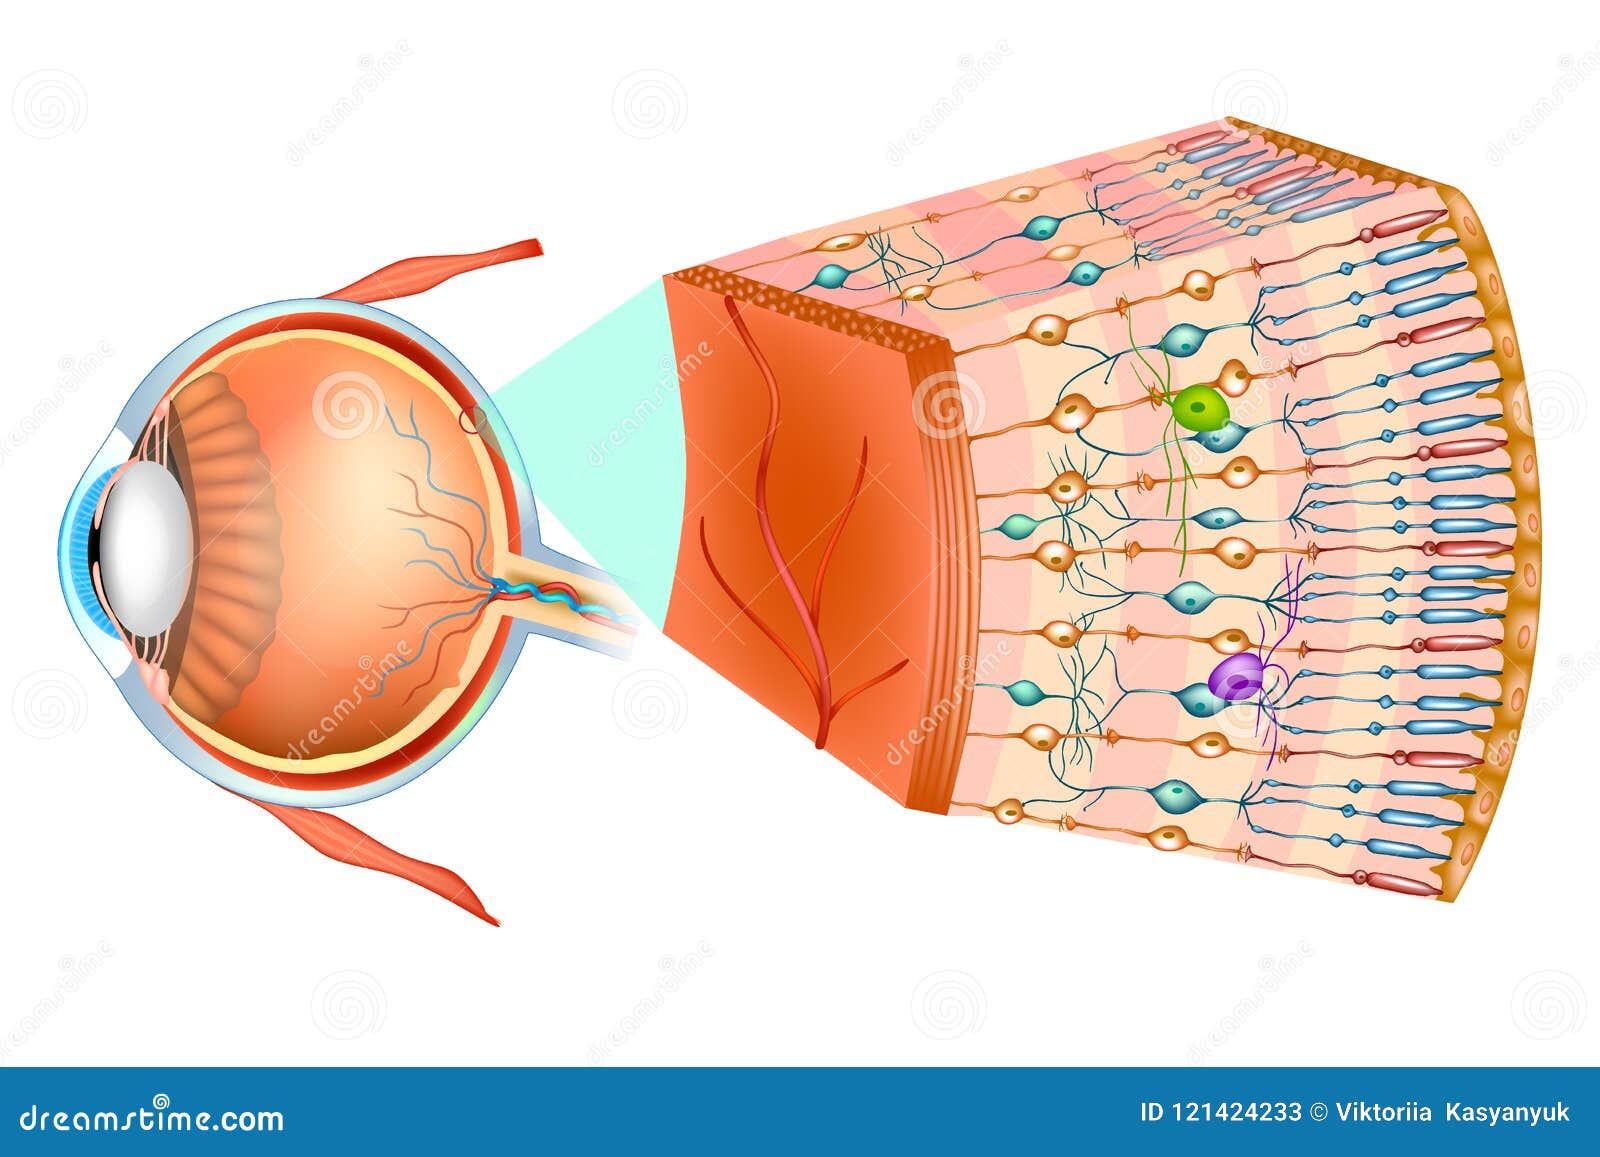 optic part of retina.